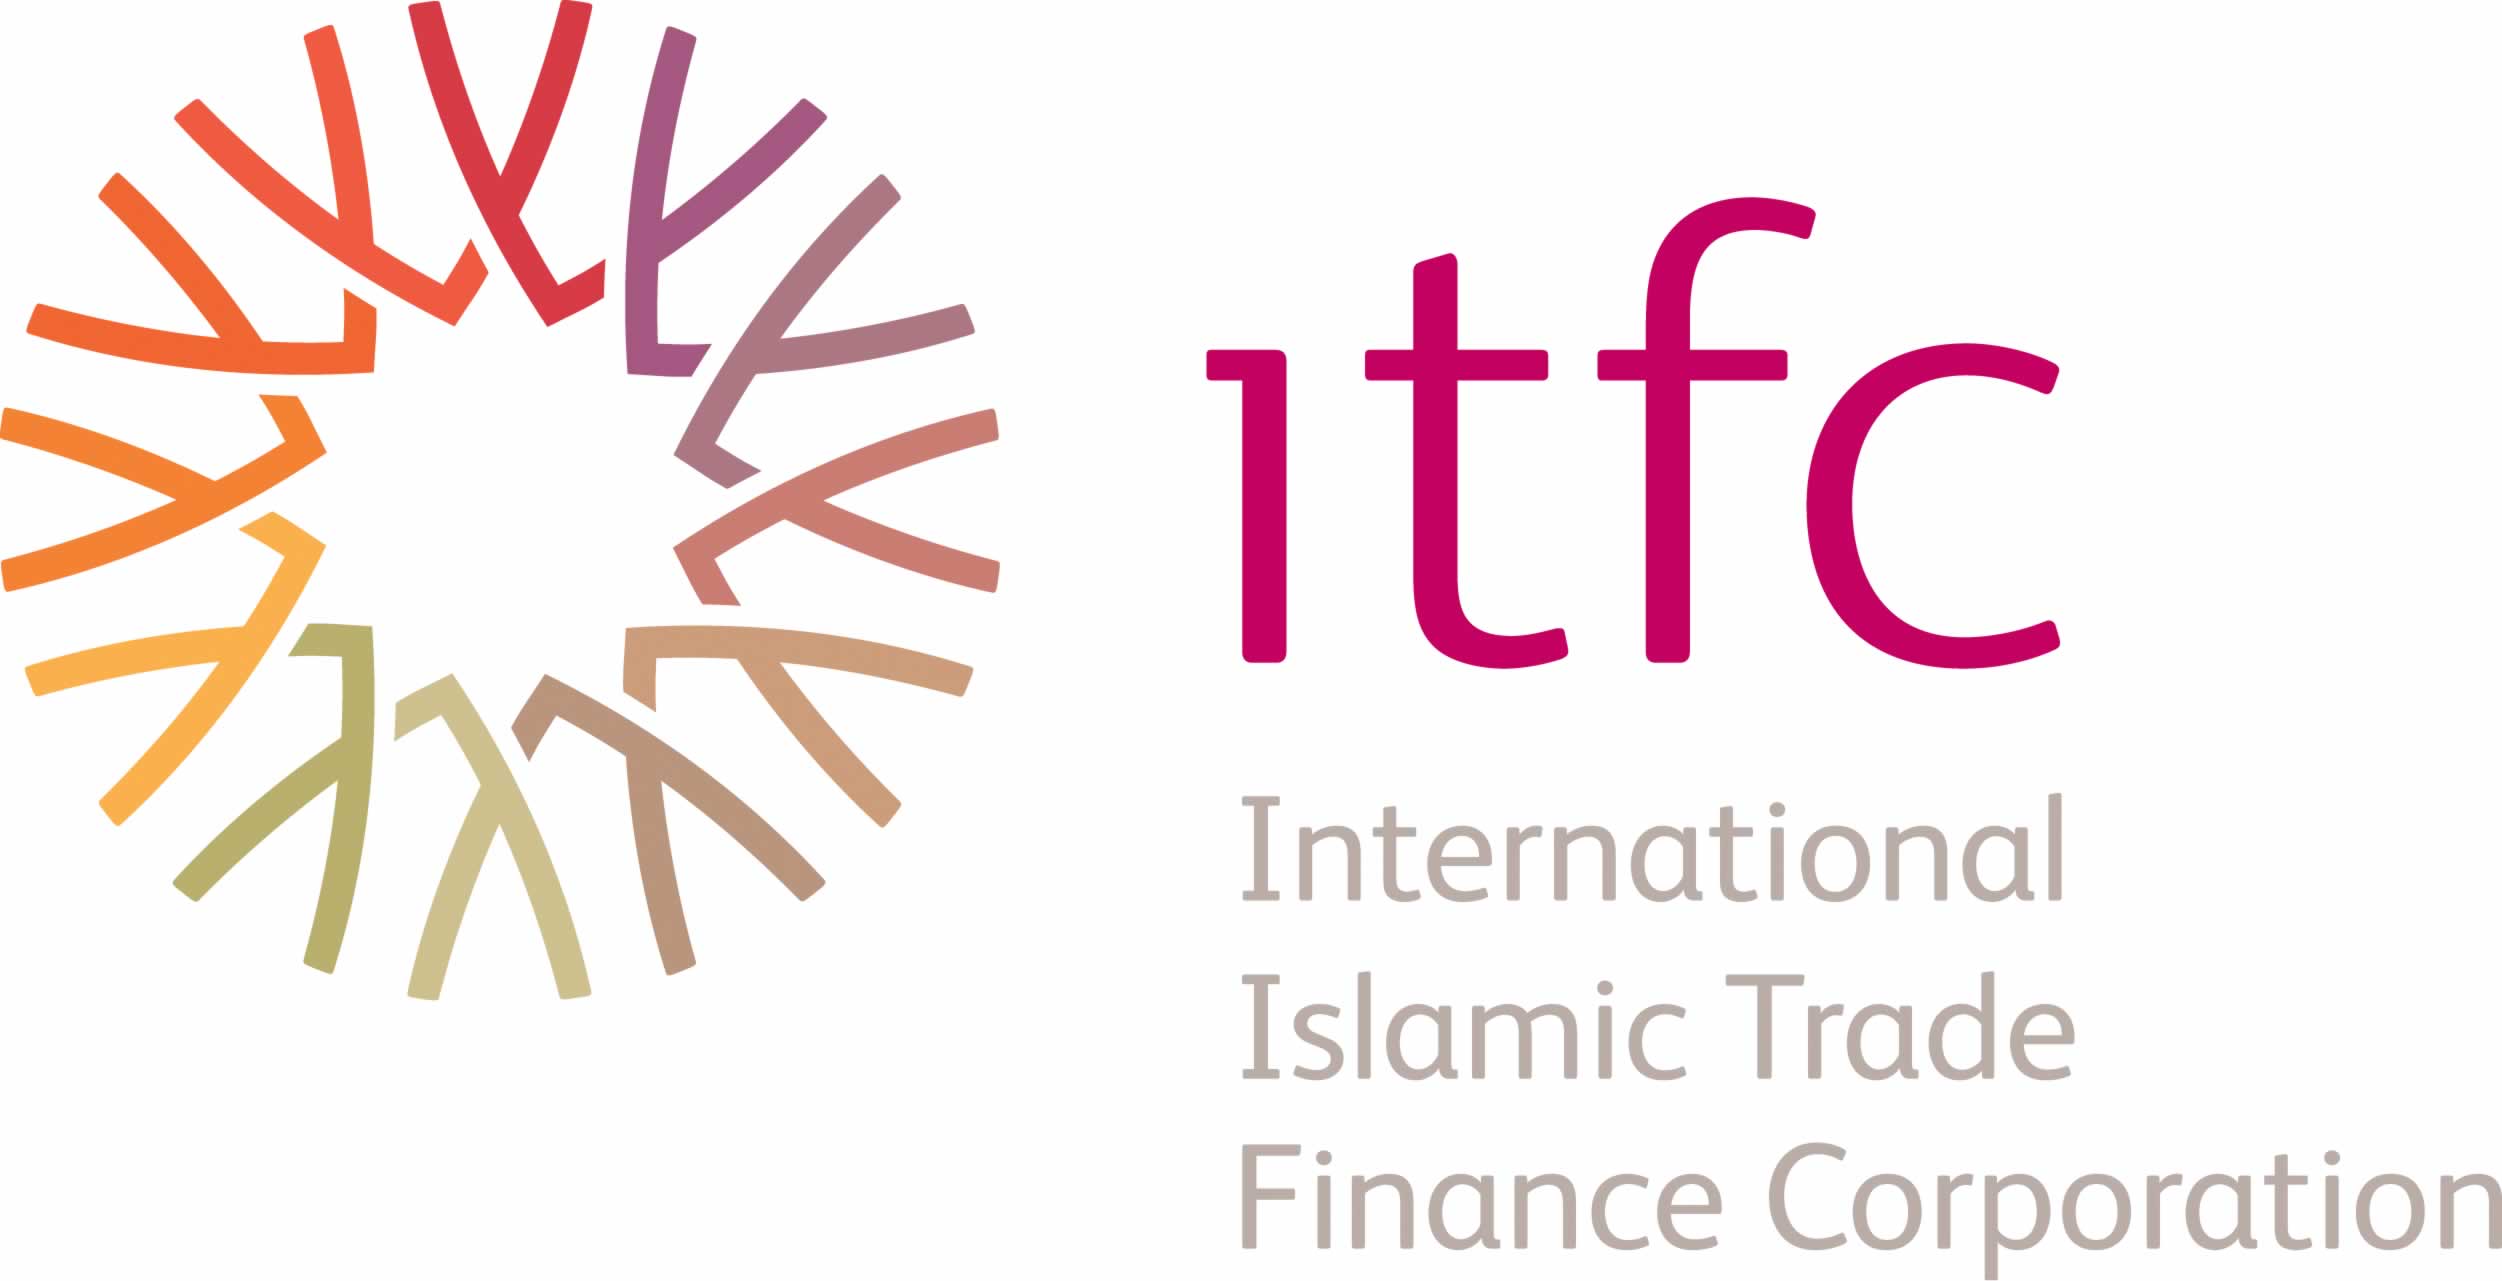 The International Islamic Trade Finance Corporation, Mizuho Bank Malaysia Sign US$100 million Trade Financing Deal